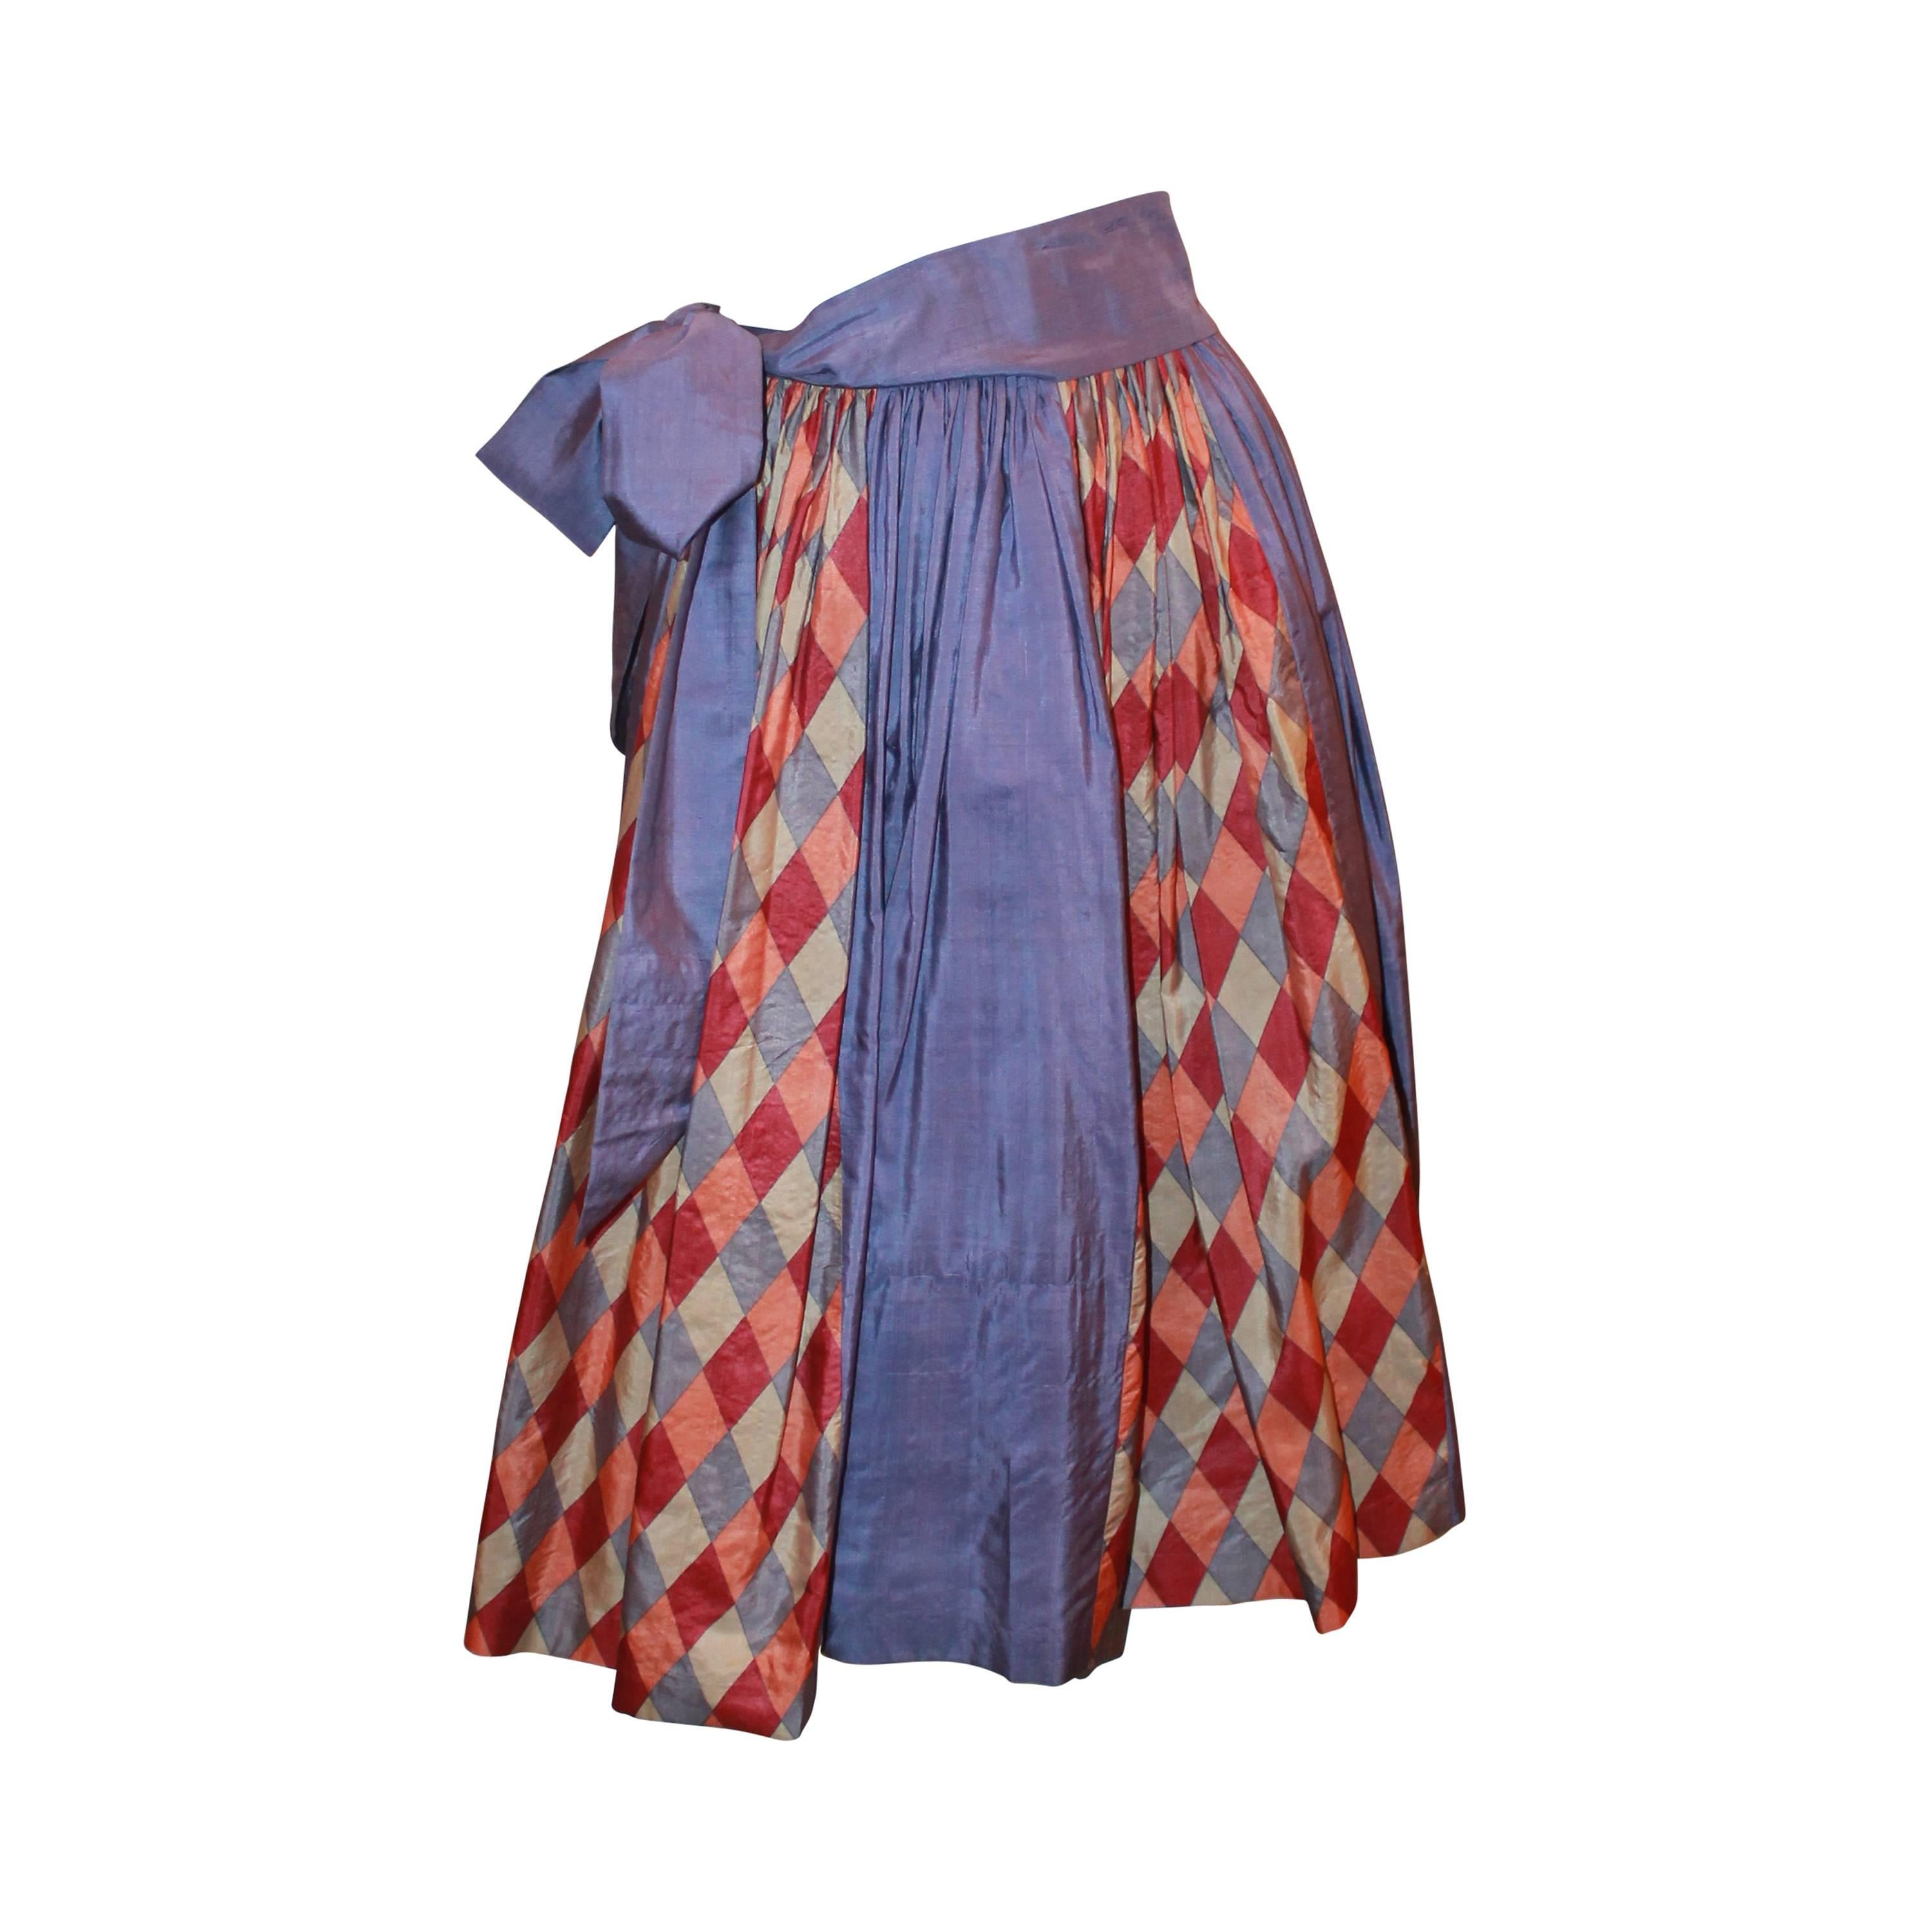 YSL Rive Gauche 1970's Lavender Silk Mid Length Skirt w/ Diamond Print - 36